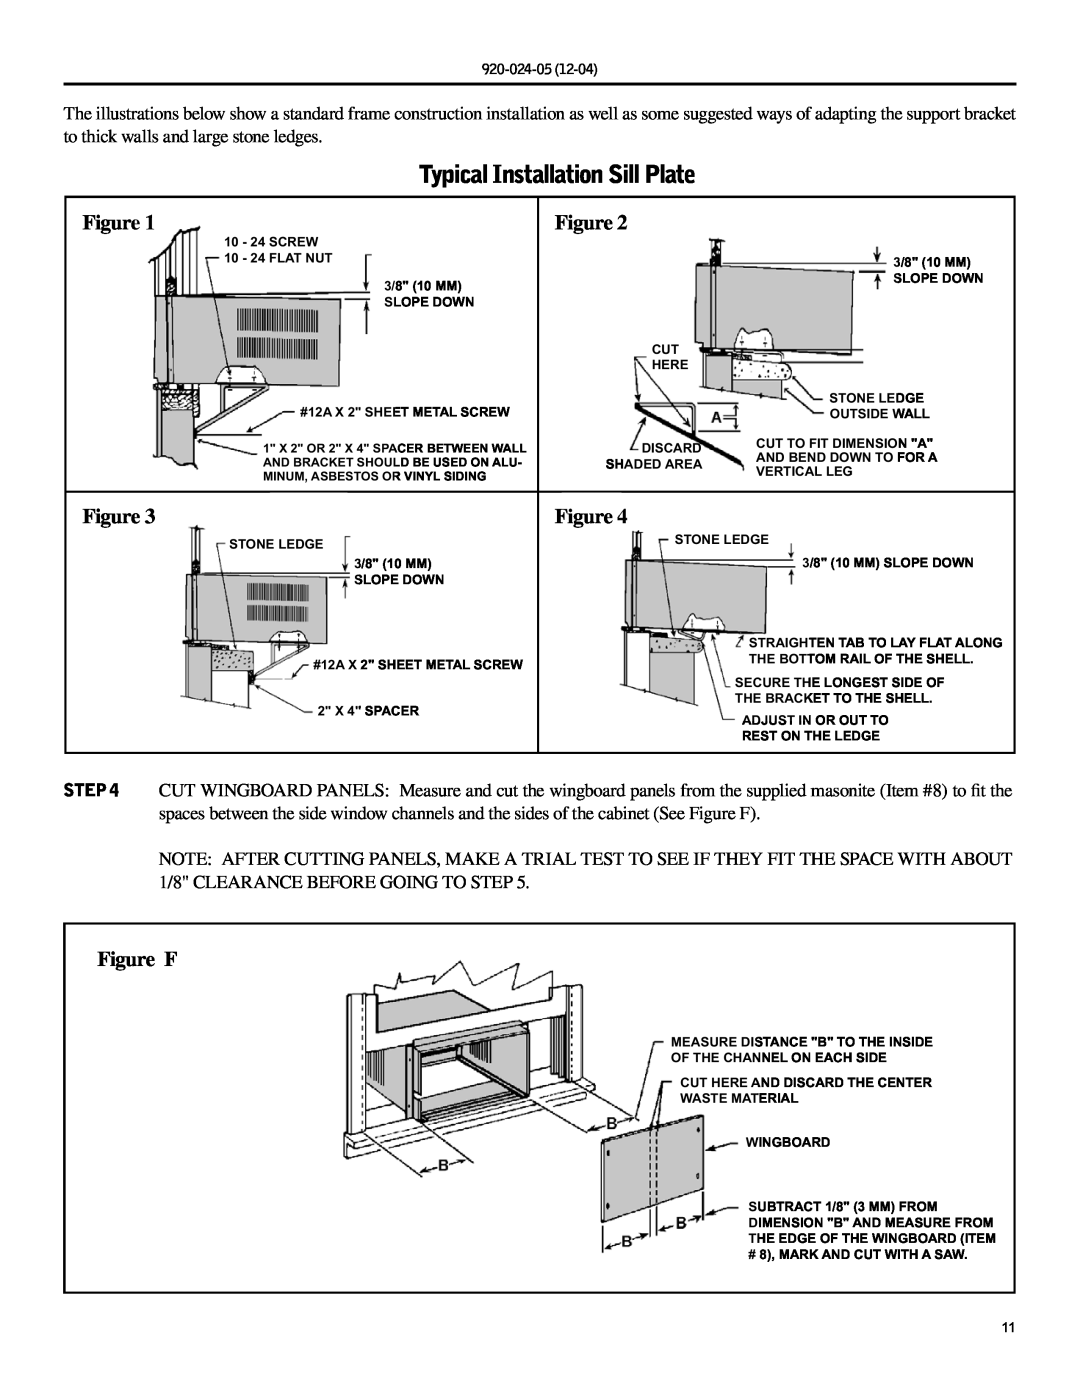 Friedrich SH20, SH15 operation manual Typical Installation Sill Plate, Figure F 